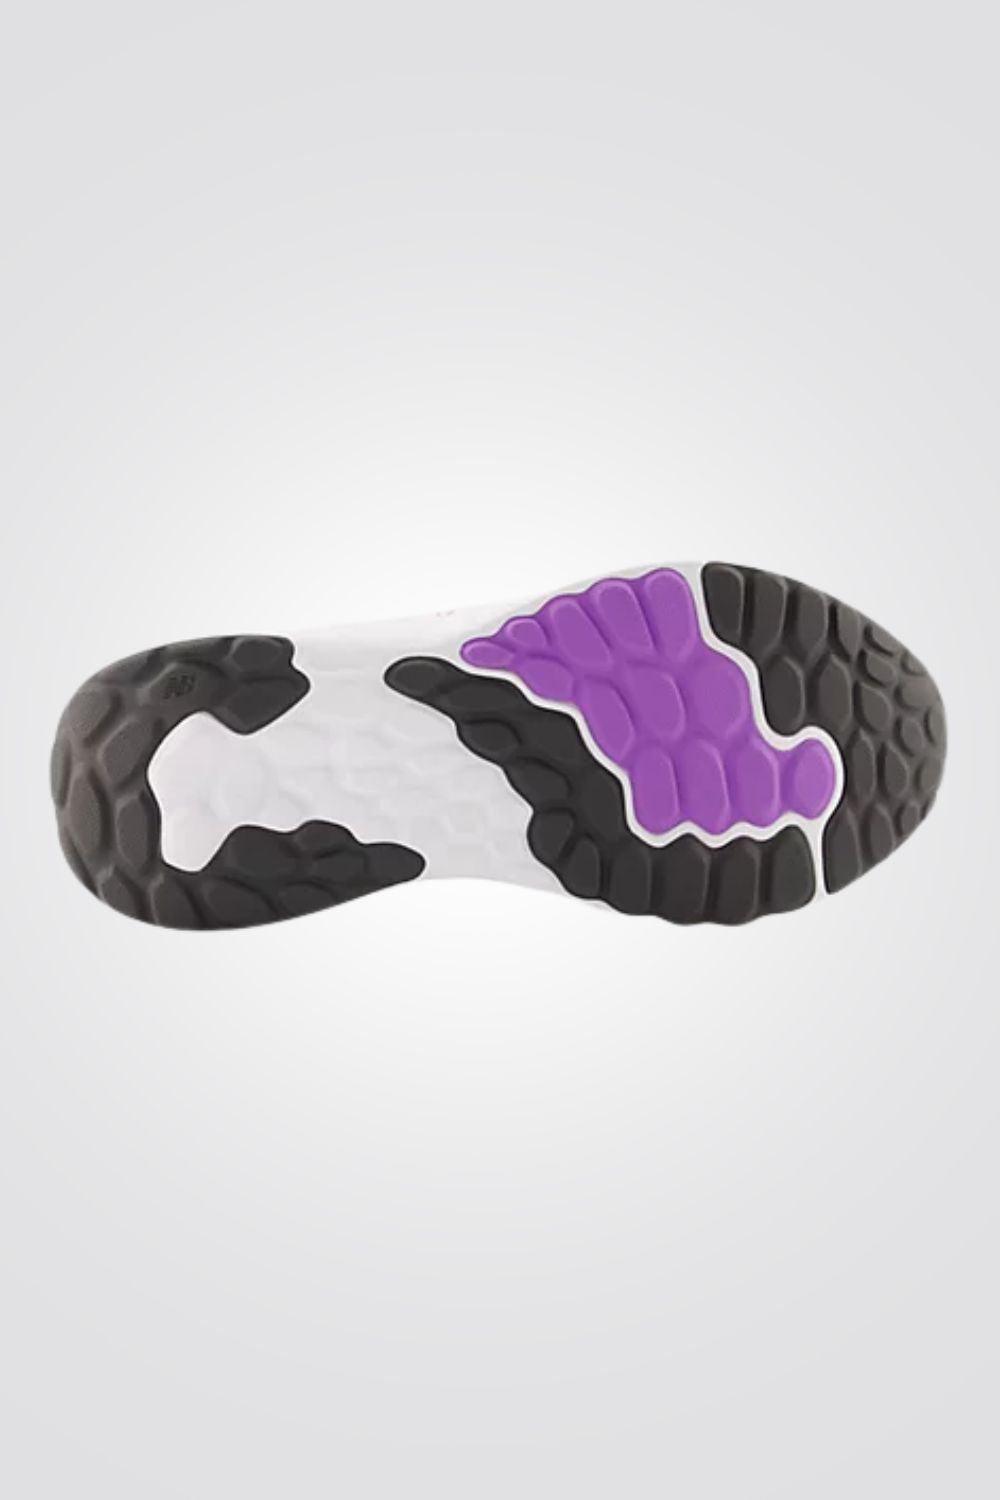 NEW BALANCE - נעלי ריצה לנשים WARISPK4 בצבע אפור - MASHBIR//365